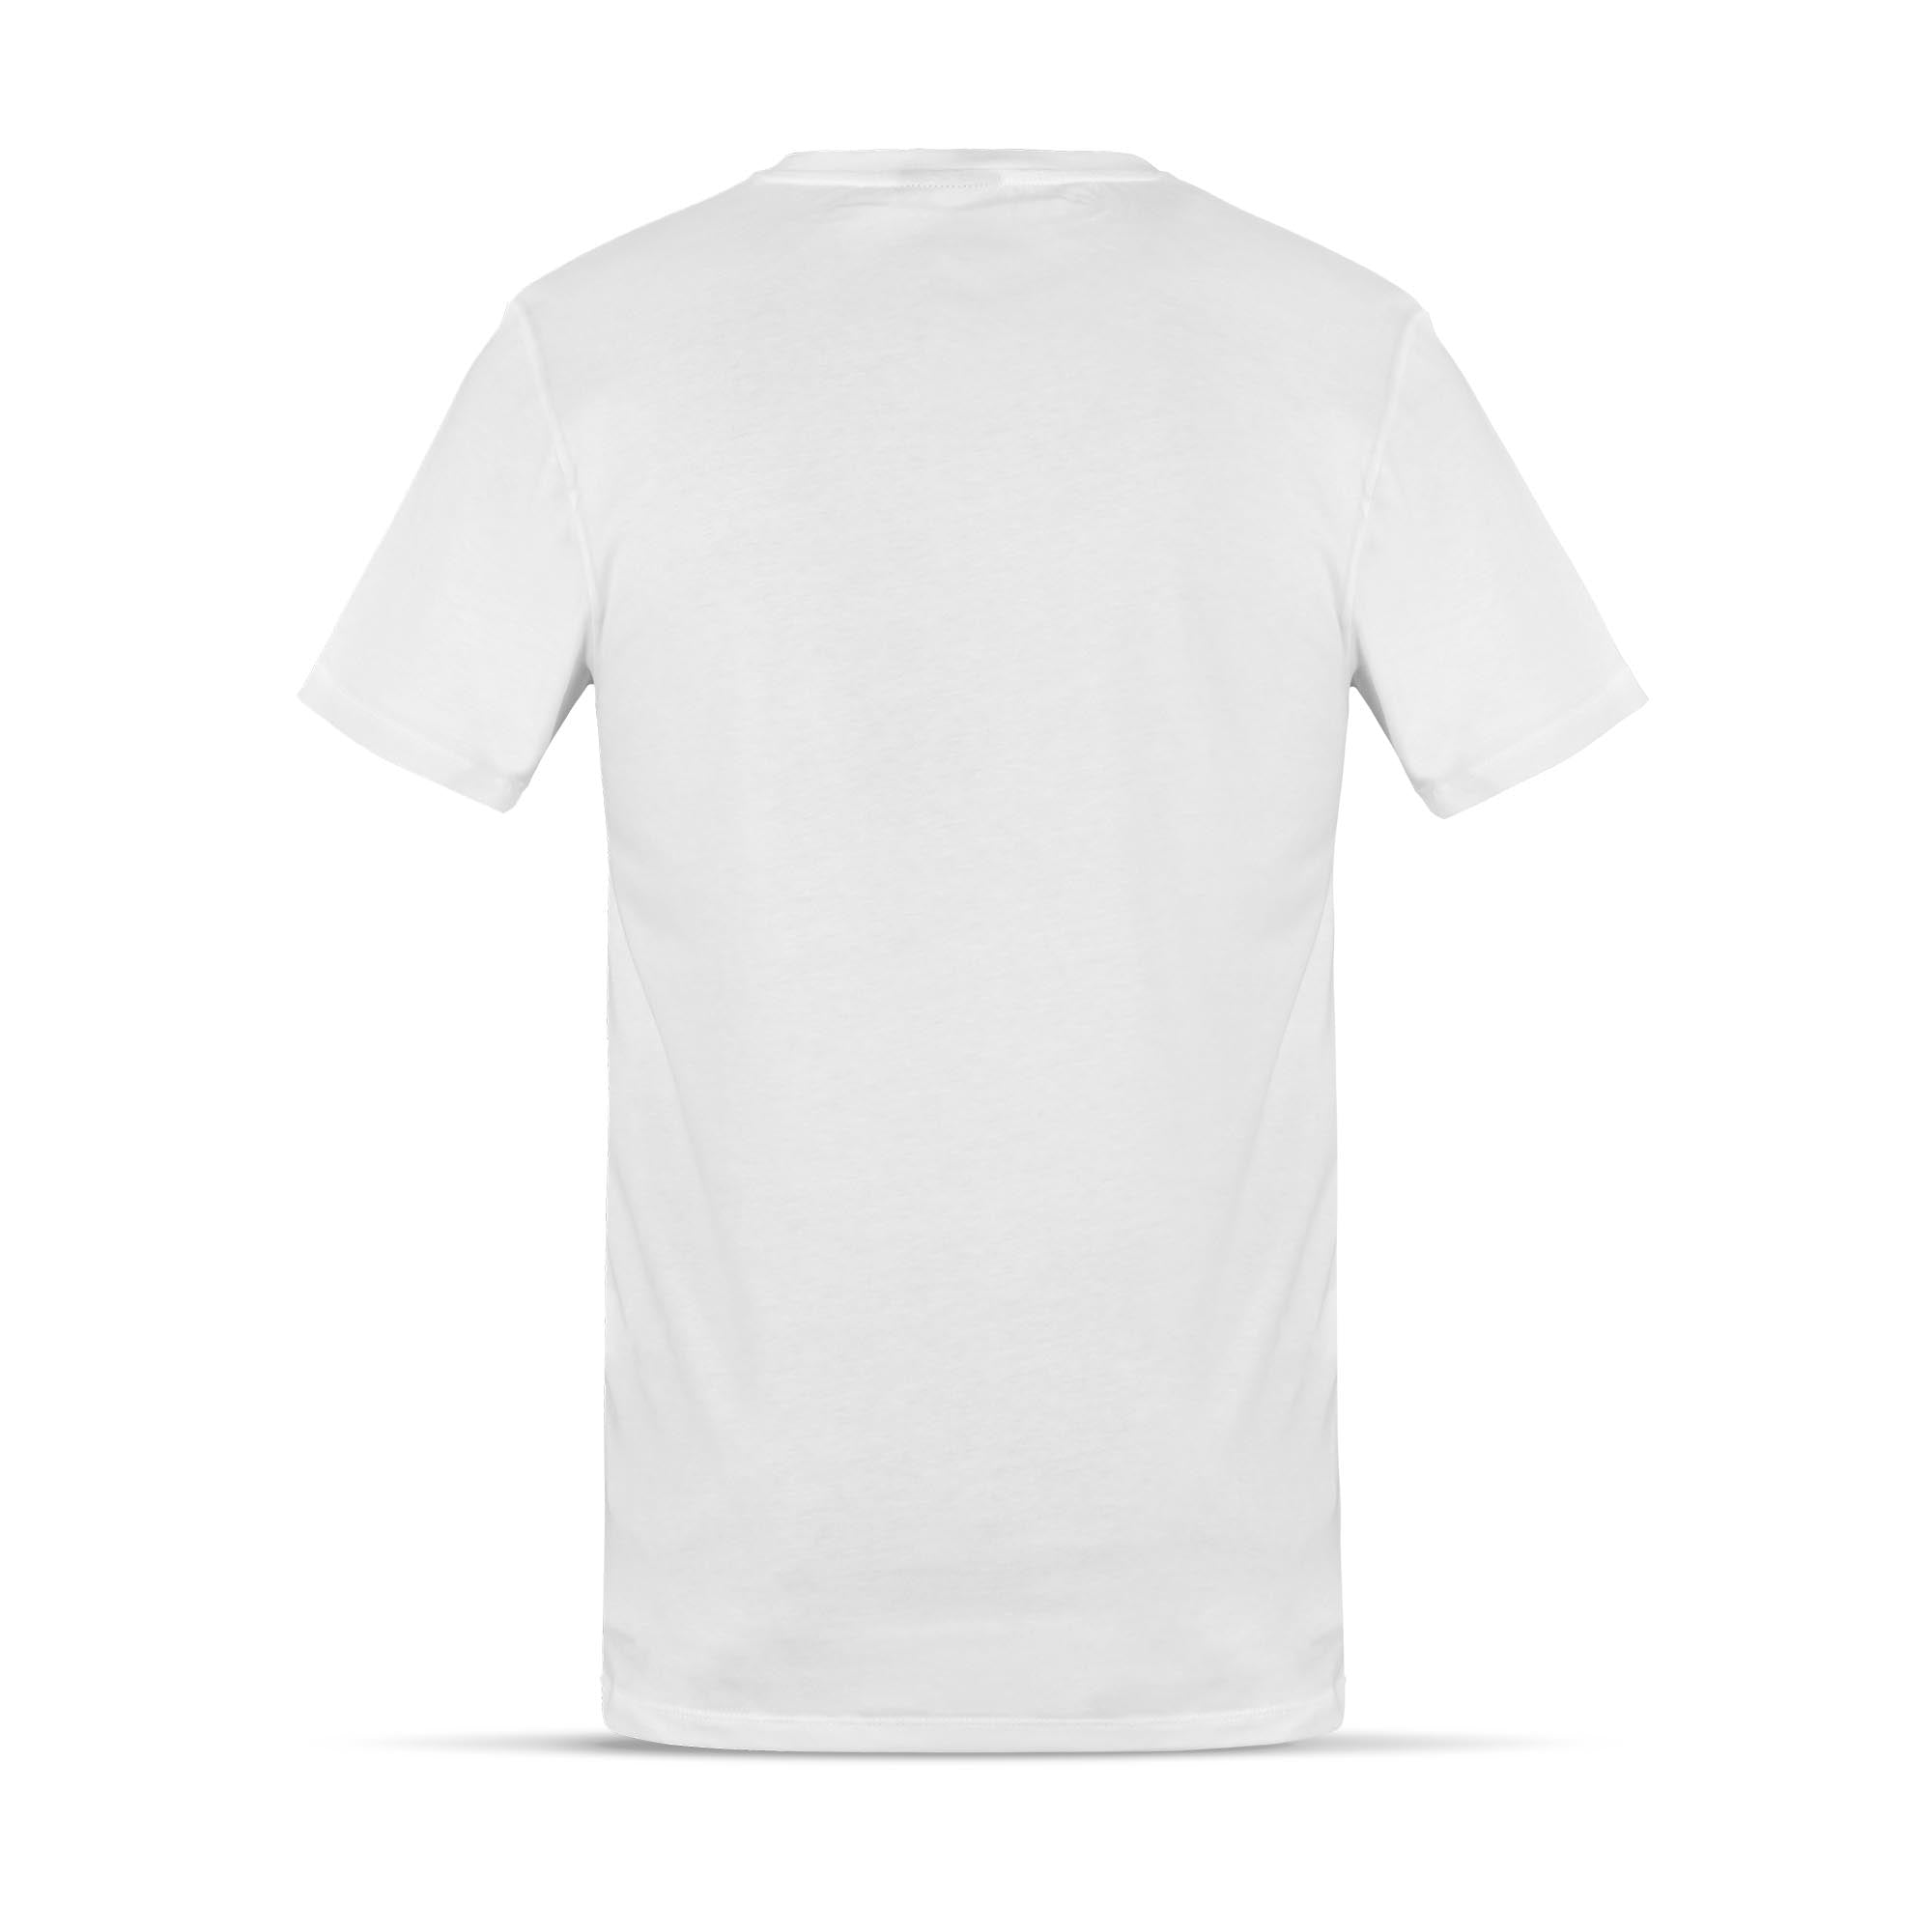 T-Shirt Outline